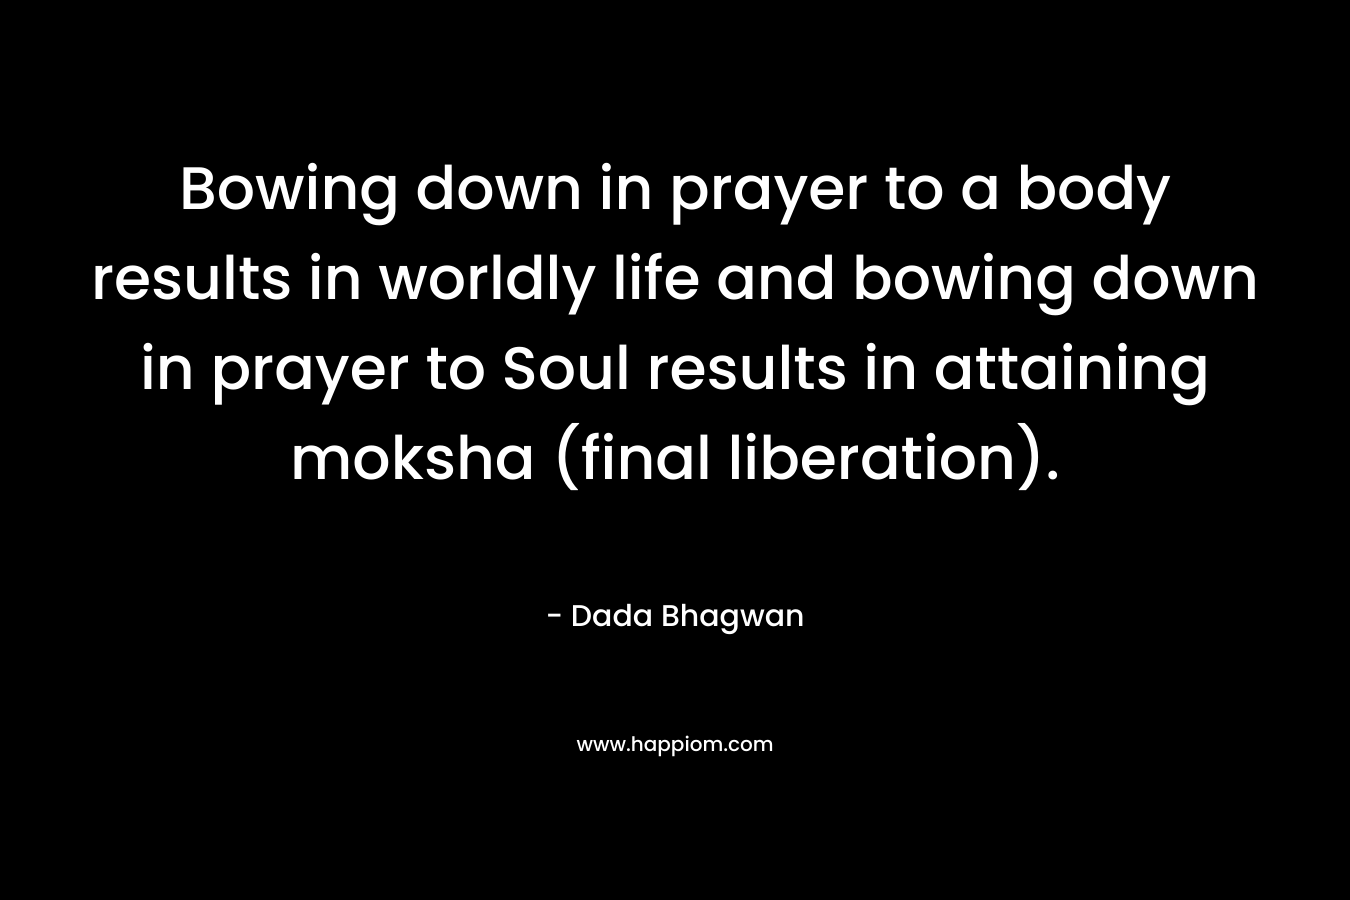 Bowing down in prayer to a body results in worldly life and bowing down in prayer to Soul results in attaining moksha (final liberation). – Dada Bhagwan